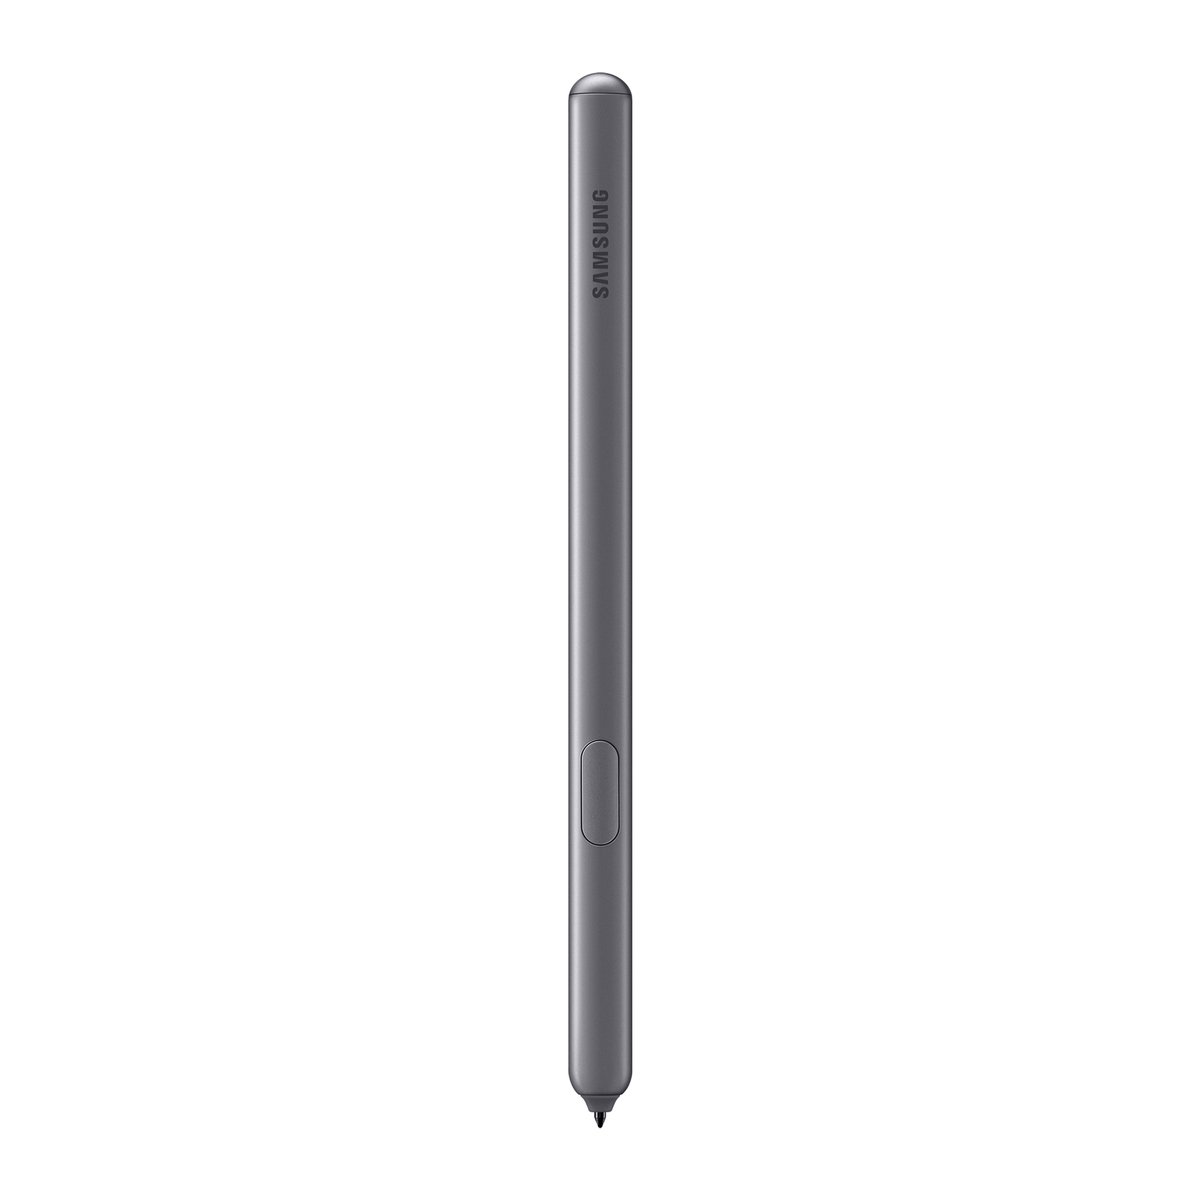 Samsung Galaxy Tab S6T860N 10.5in128GB Wifi Mountain Grey